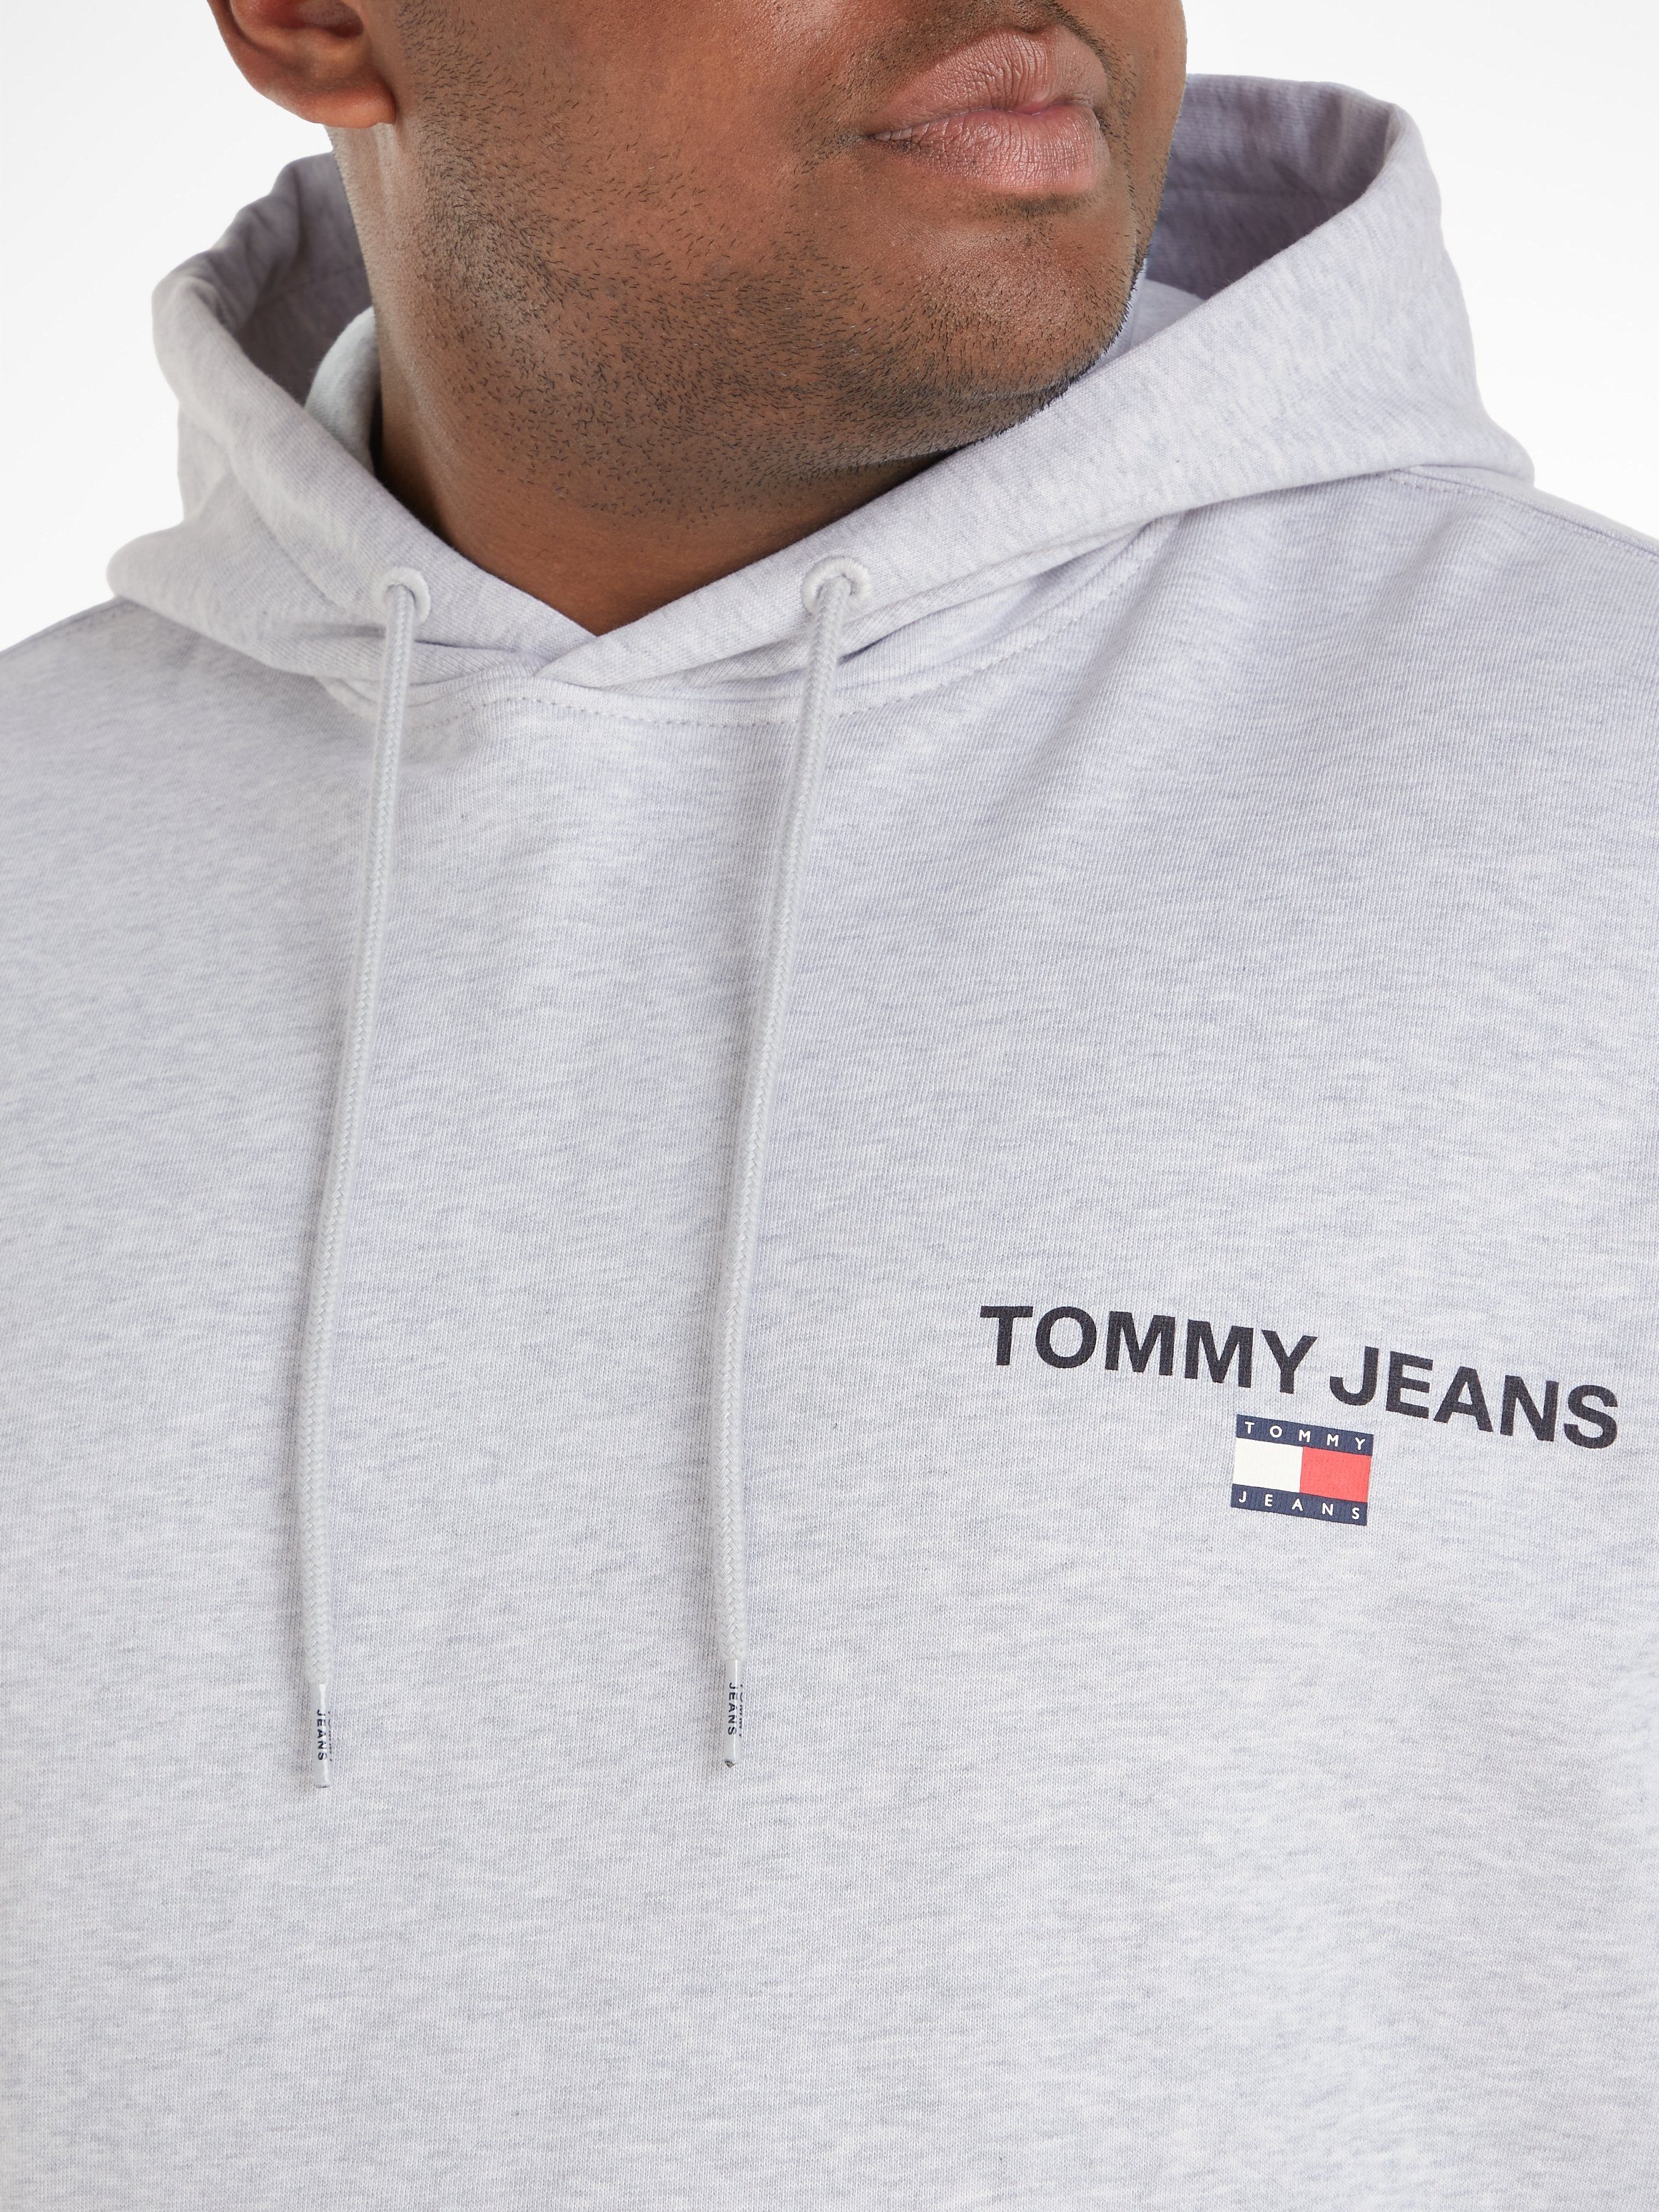 Htr Tommy PLUS Plus Hoodie TJM Silver Grey ENTRY HOOD REG GRAPHIC Jeans